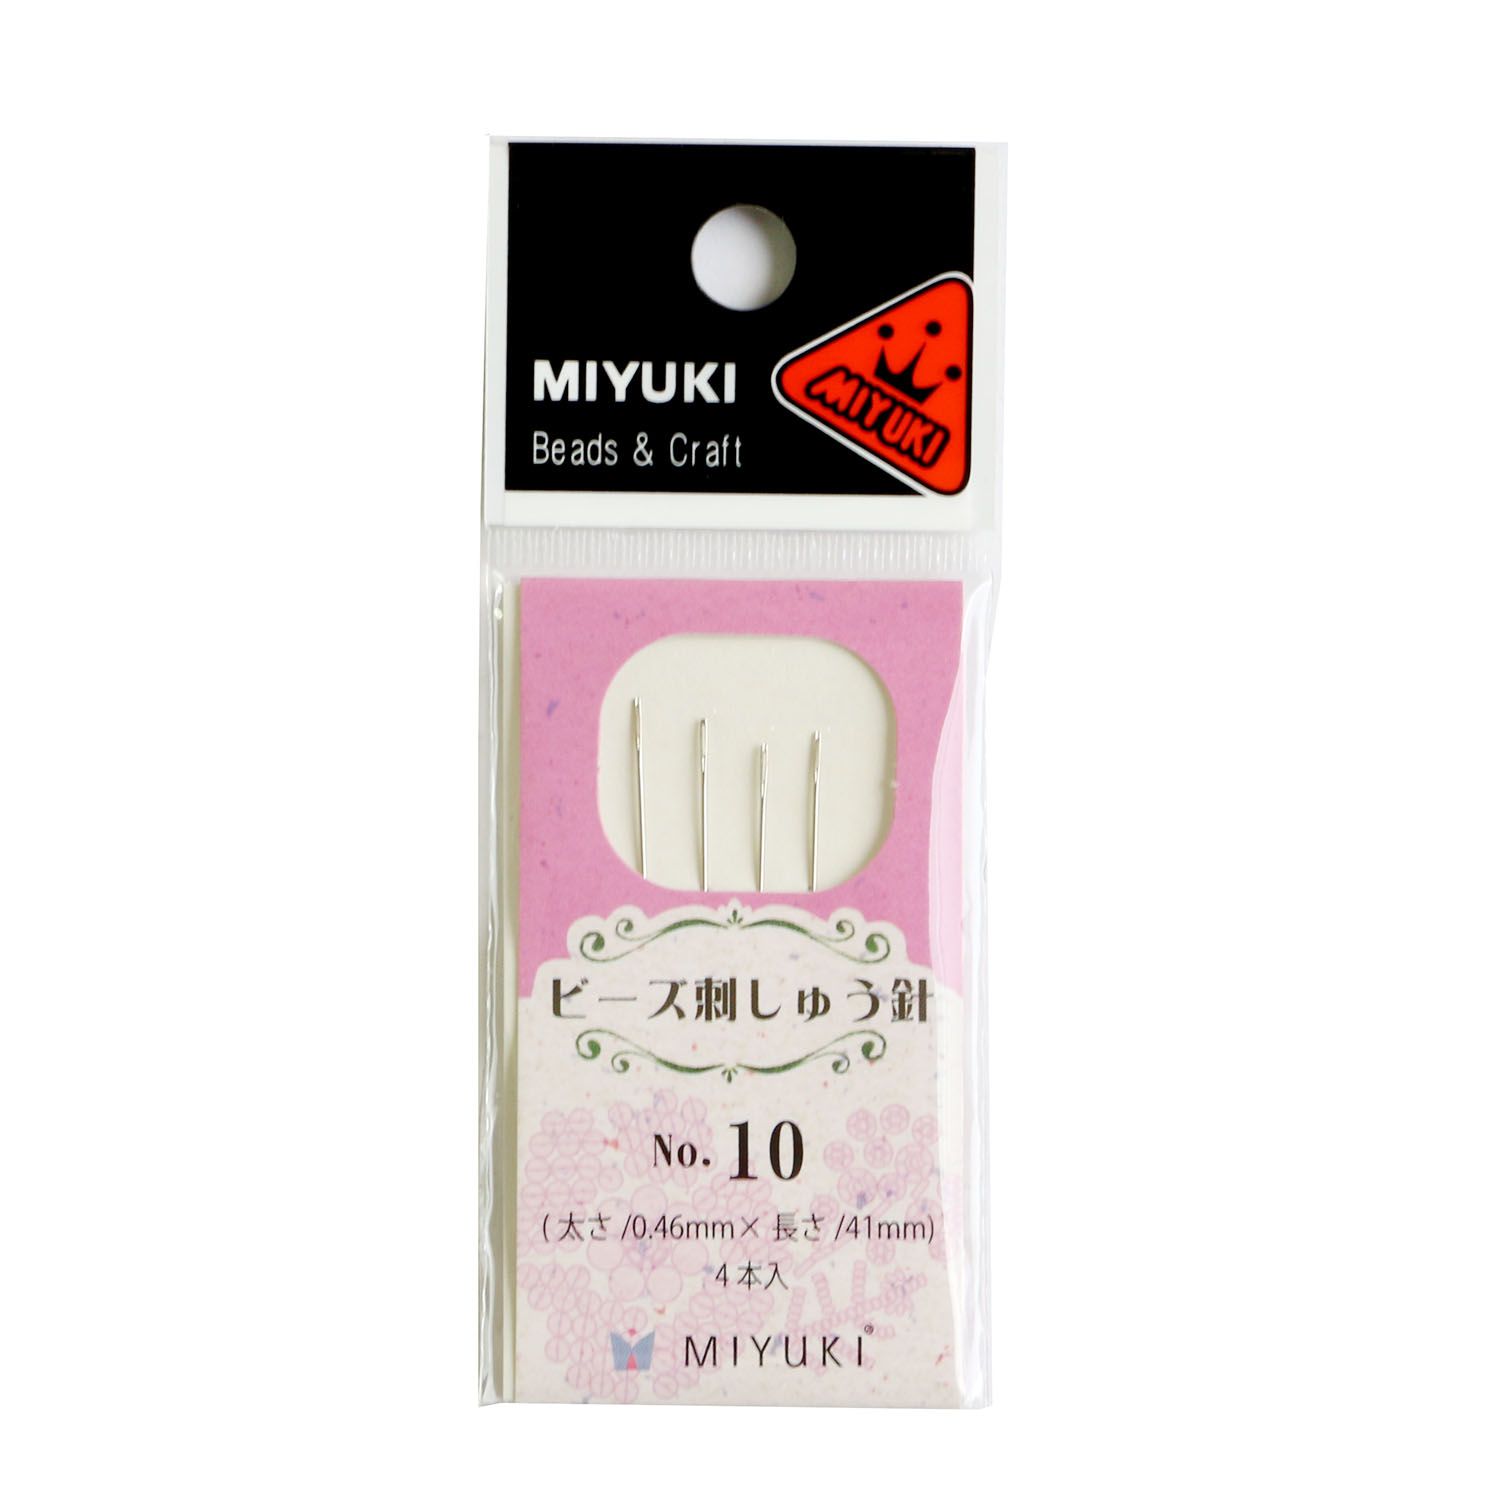 MIY-K5481 MIYUKI ビーズ刺しゅう針 No.10 4本入 (枚)